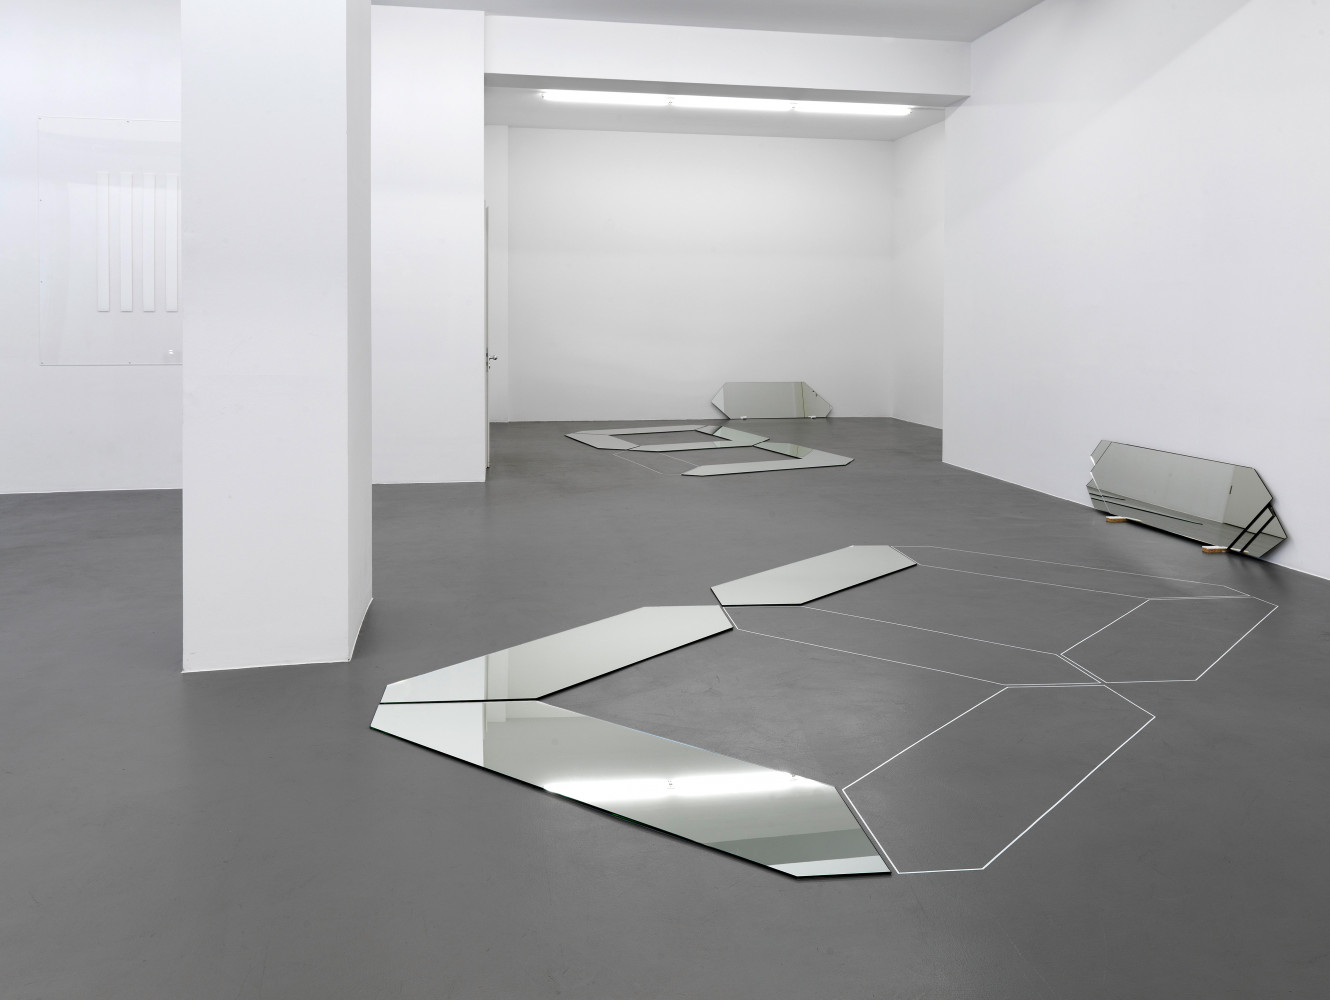 ‘Daniel Buren, Tony Cragg, Tatsuo Miyajima’, Installationsansicht, Buchmann Galerie, 2012